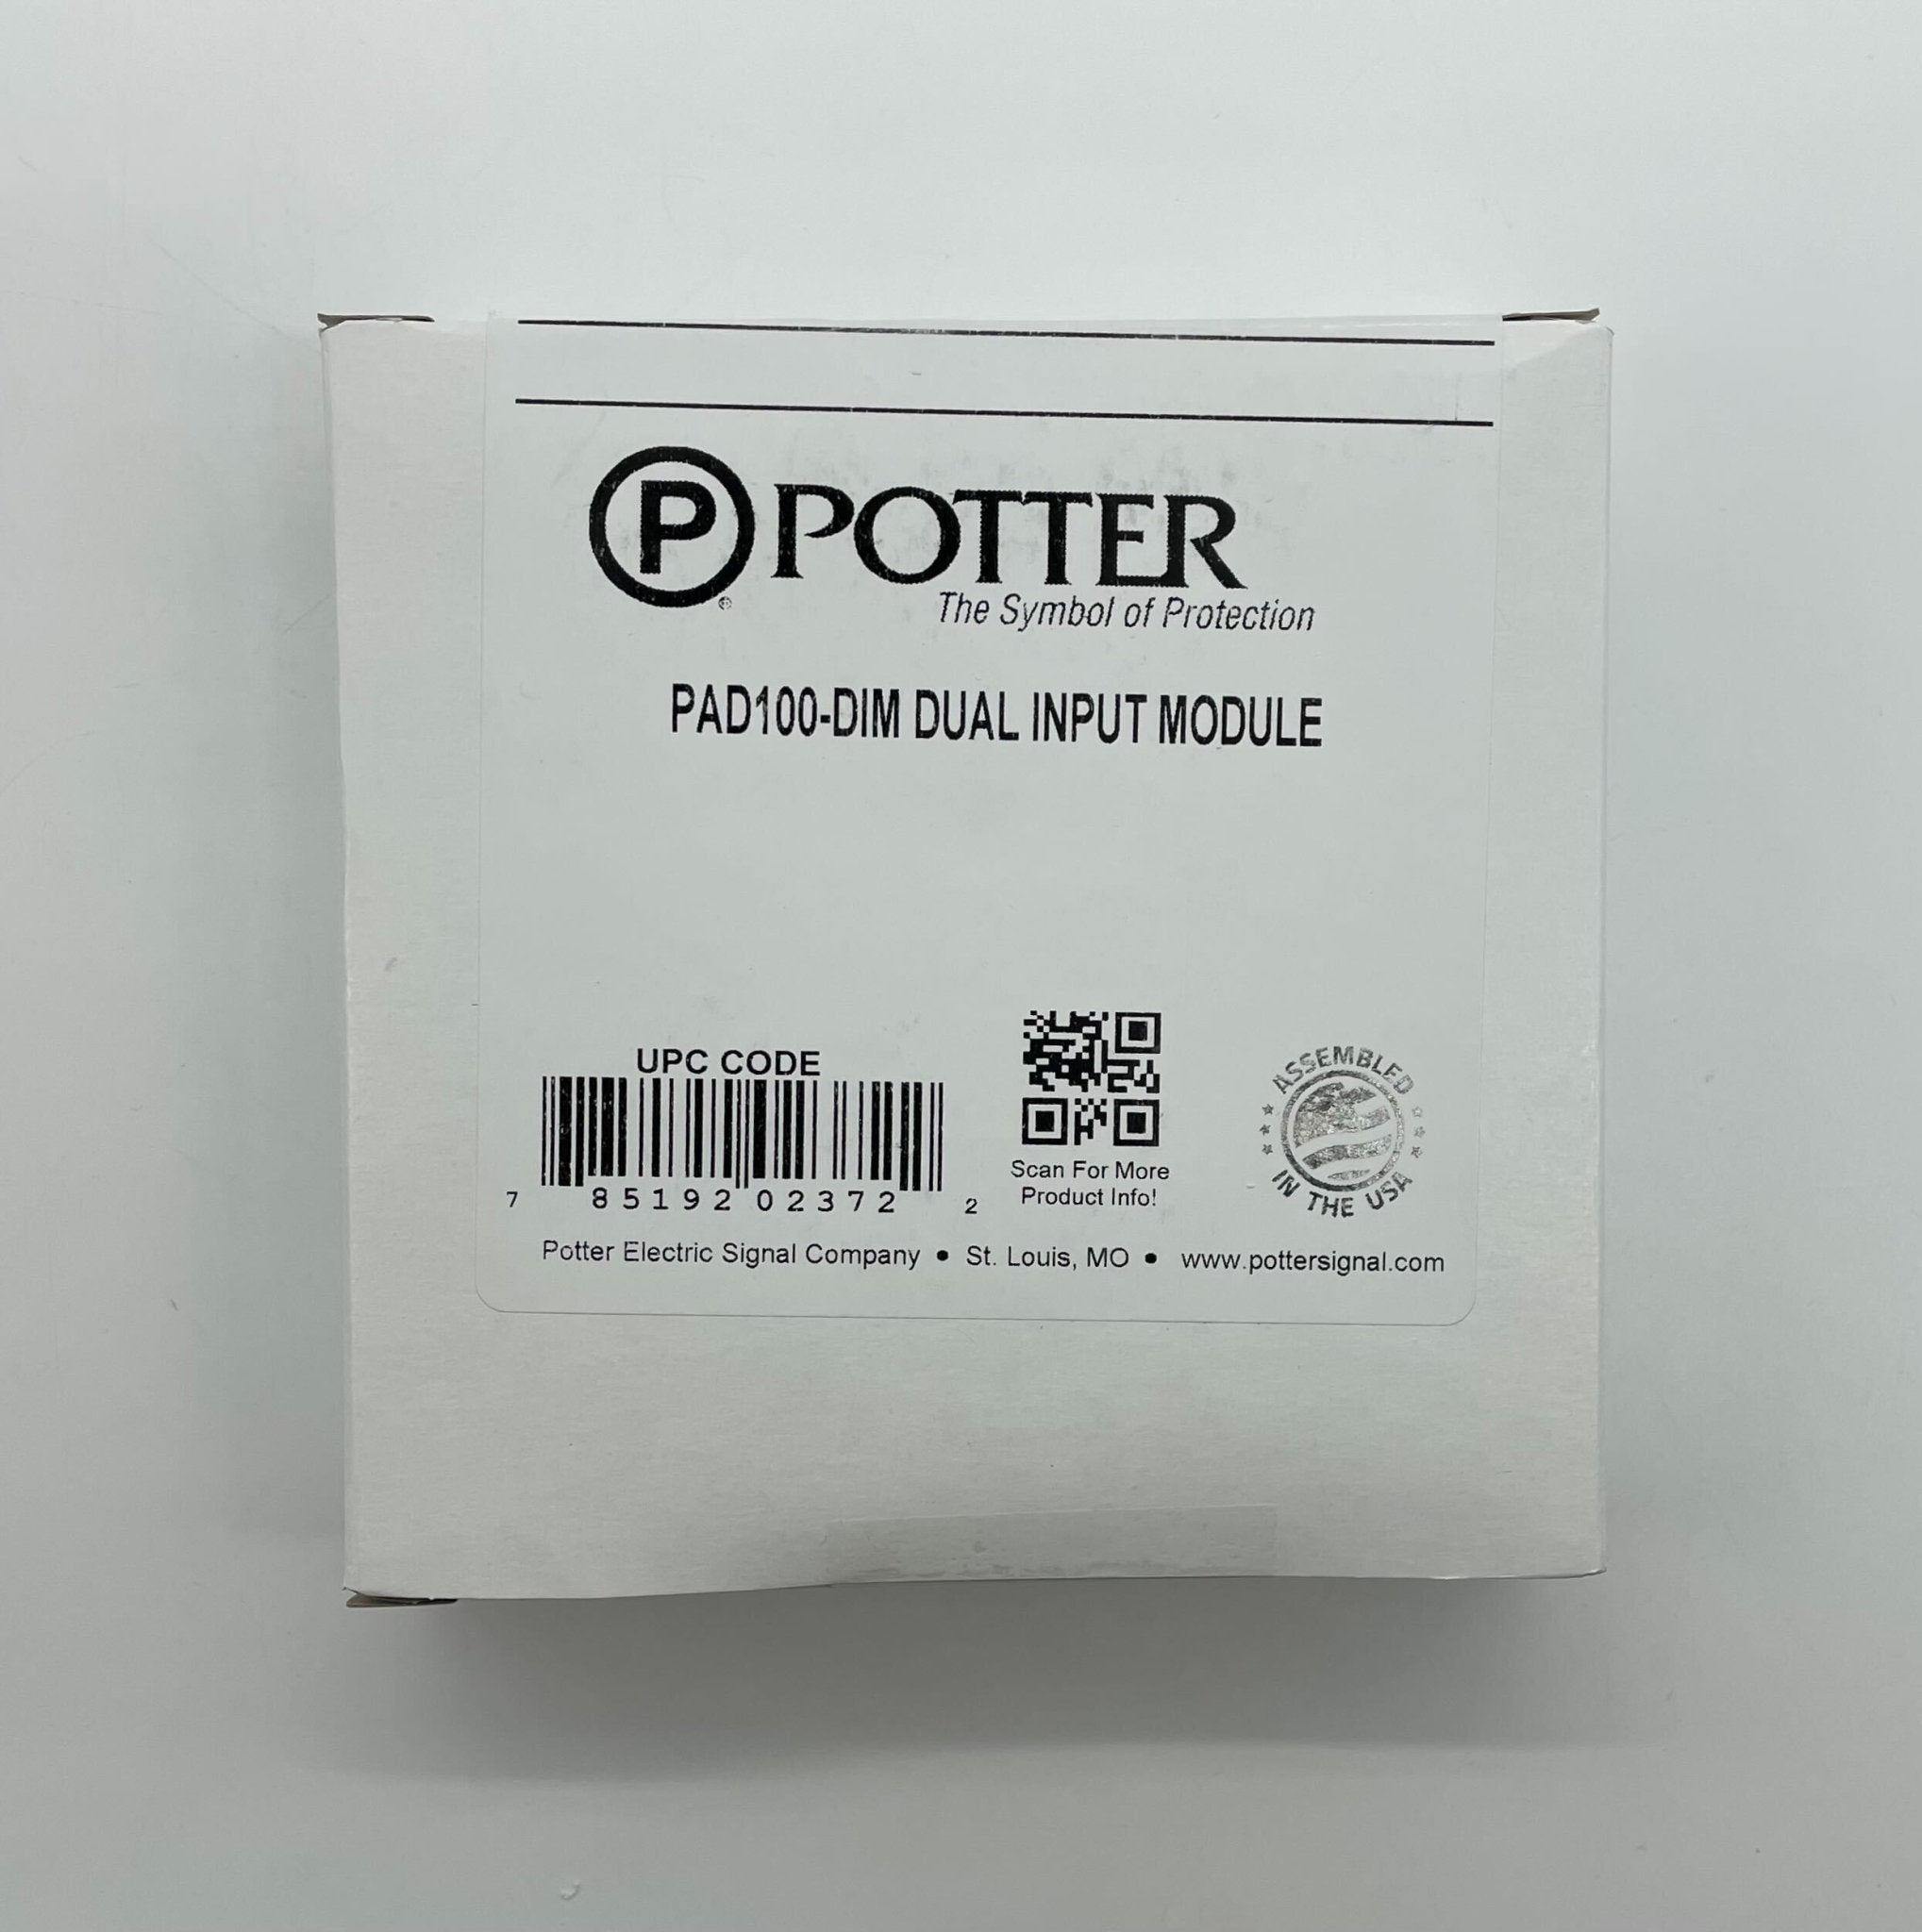 Potter PAD100-DIM - The Fire Alarm Supplier